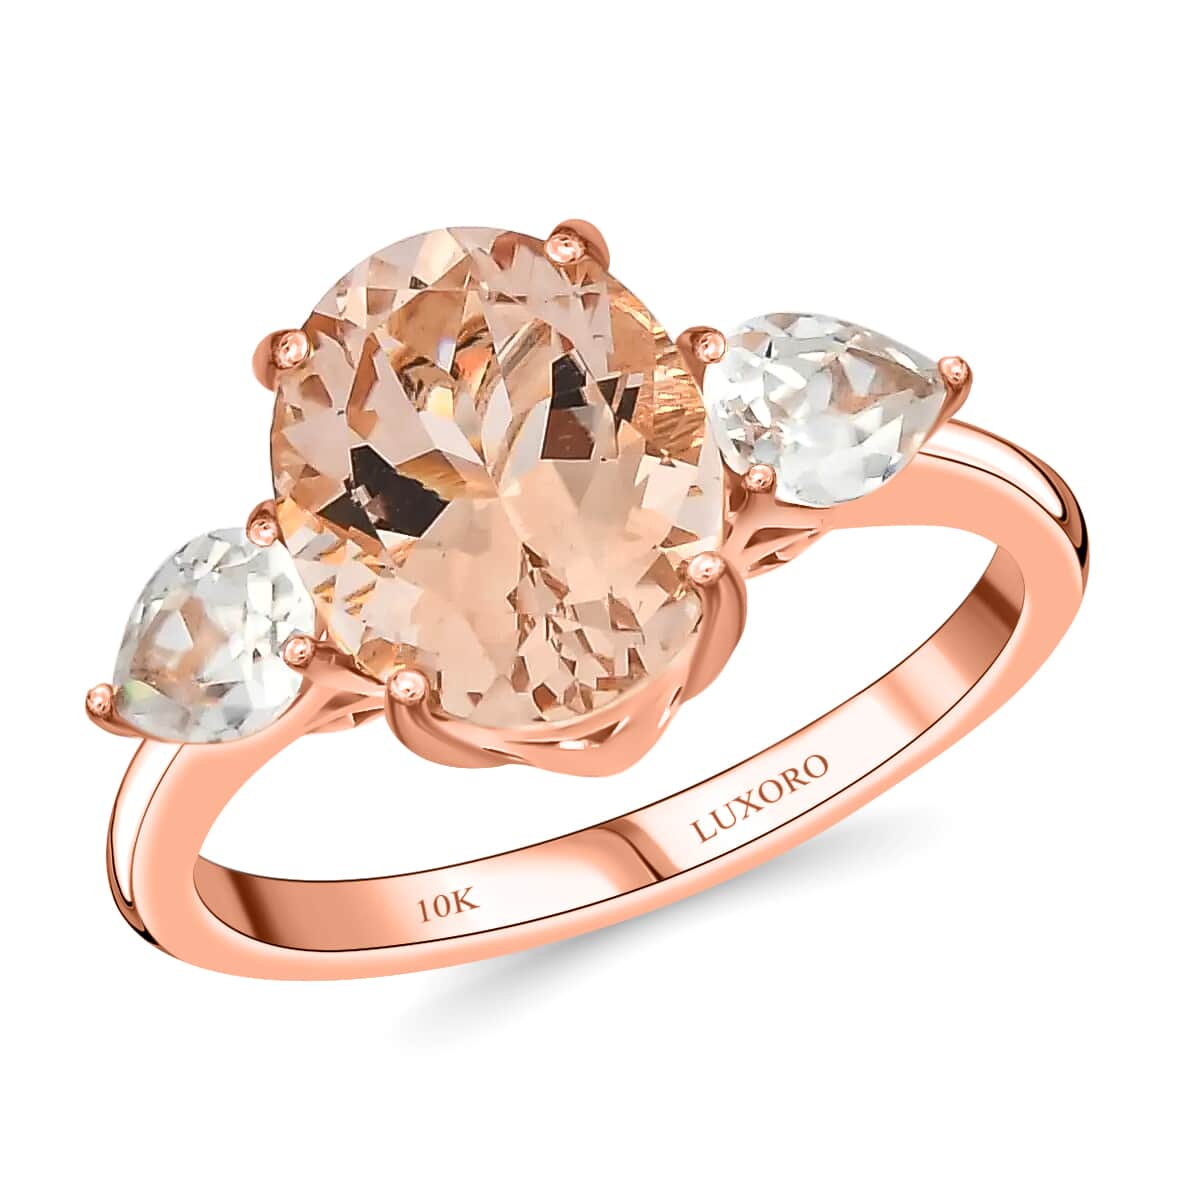 Luxoro 10K Rose Gold Premium Marropino Morganite and Natural White Zircon 3 Stone Ring (Size 6.5) 2.30 Grams 3.00 ctw image number 0